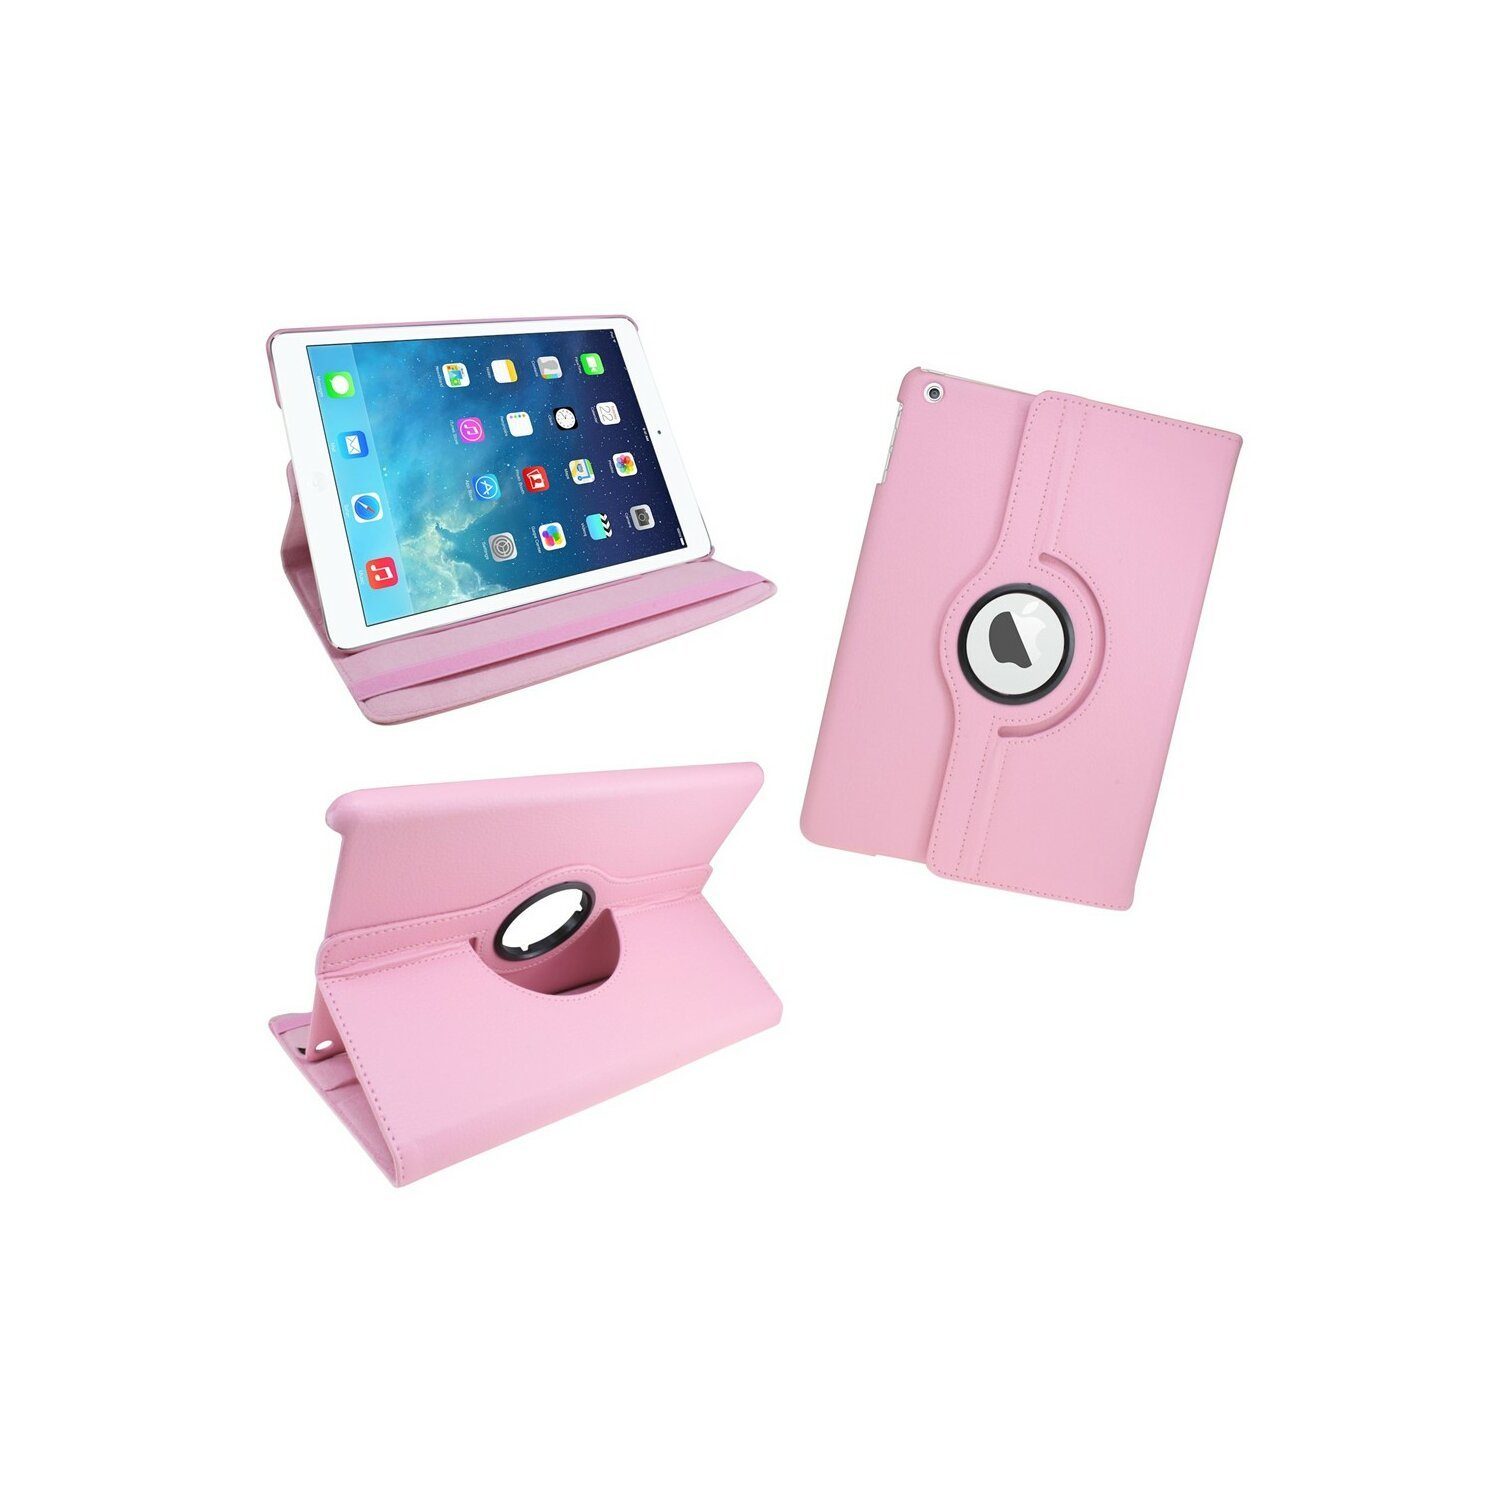 cofi1453 Tablet-Hülle Tablet Tasche 360° Rotierbar Schutzhülle für Ipad AIR Rosa